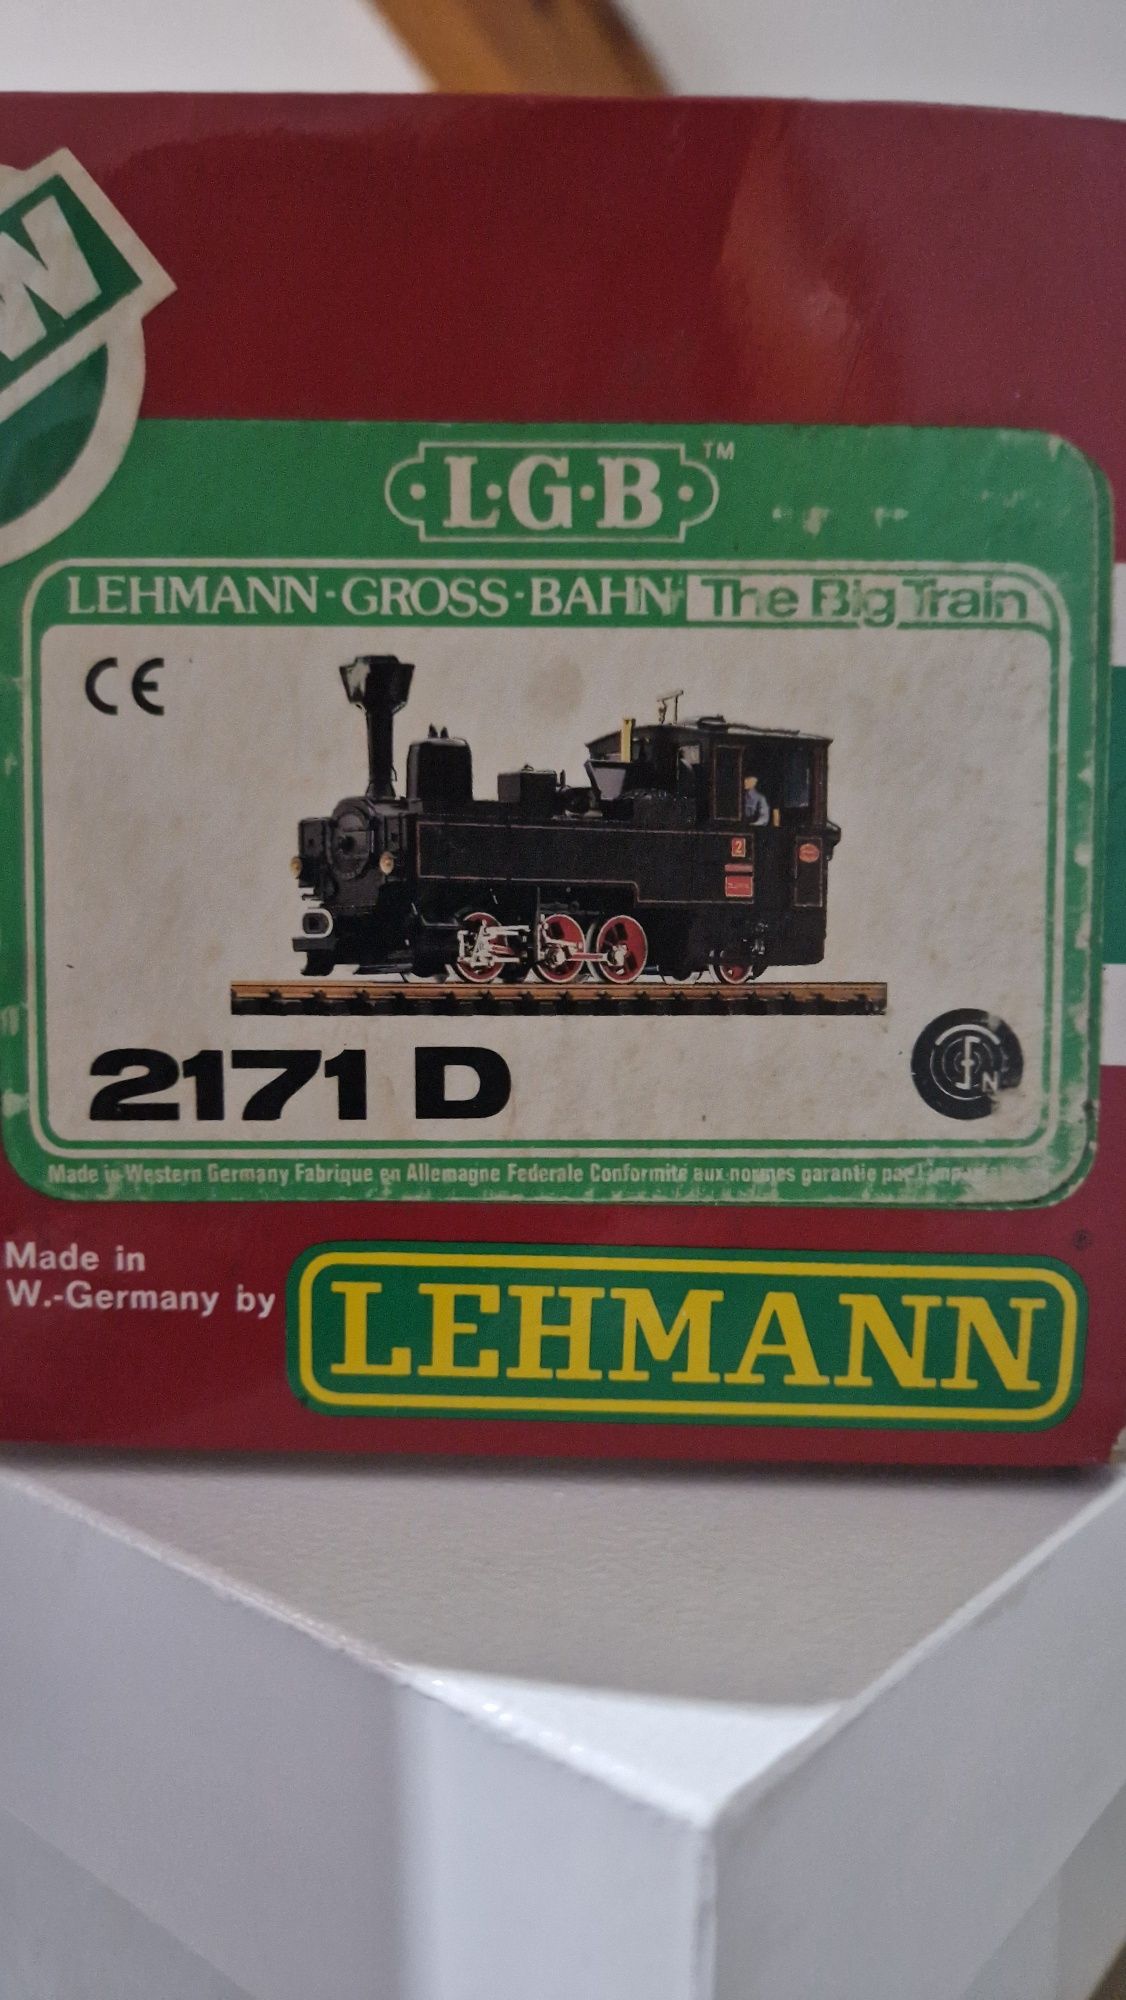 Tanio piękny parowoz LGB lehmann 2171 D skala G unikat